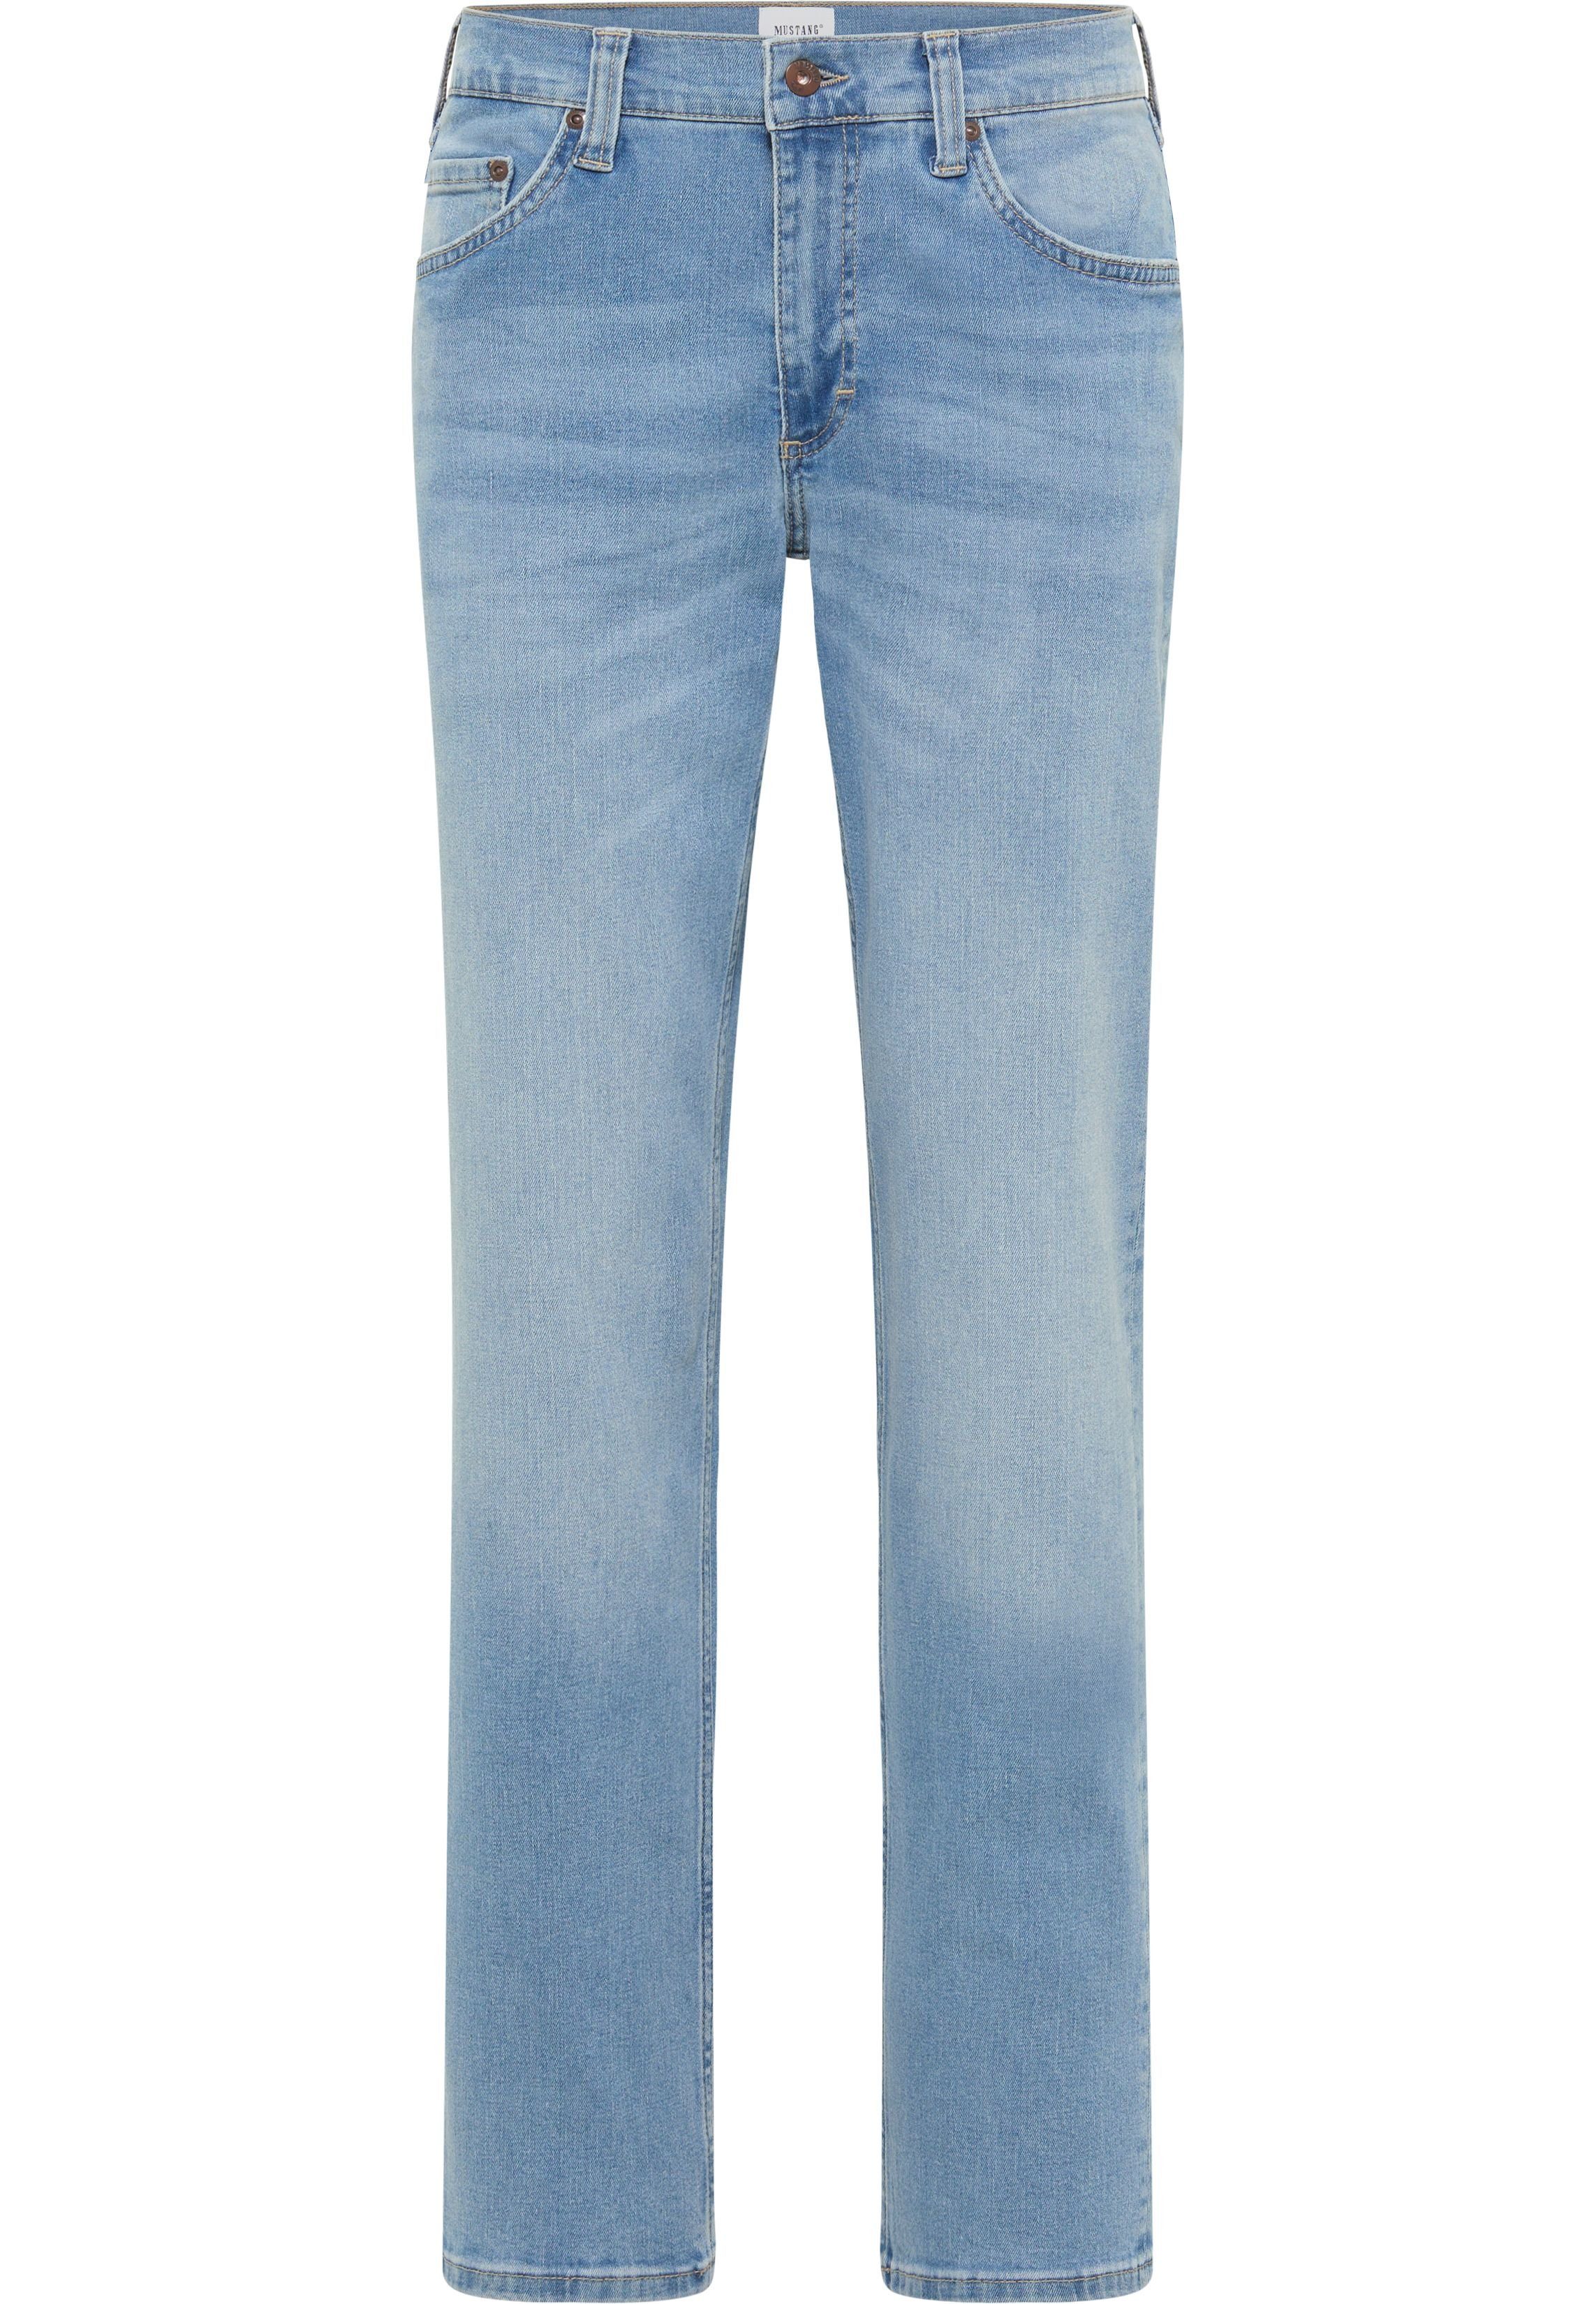 Top-Verkaufskanal MUSTANG 5-Pocket-Jeans